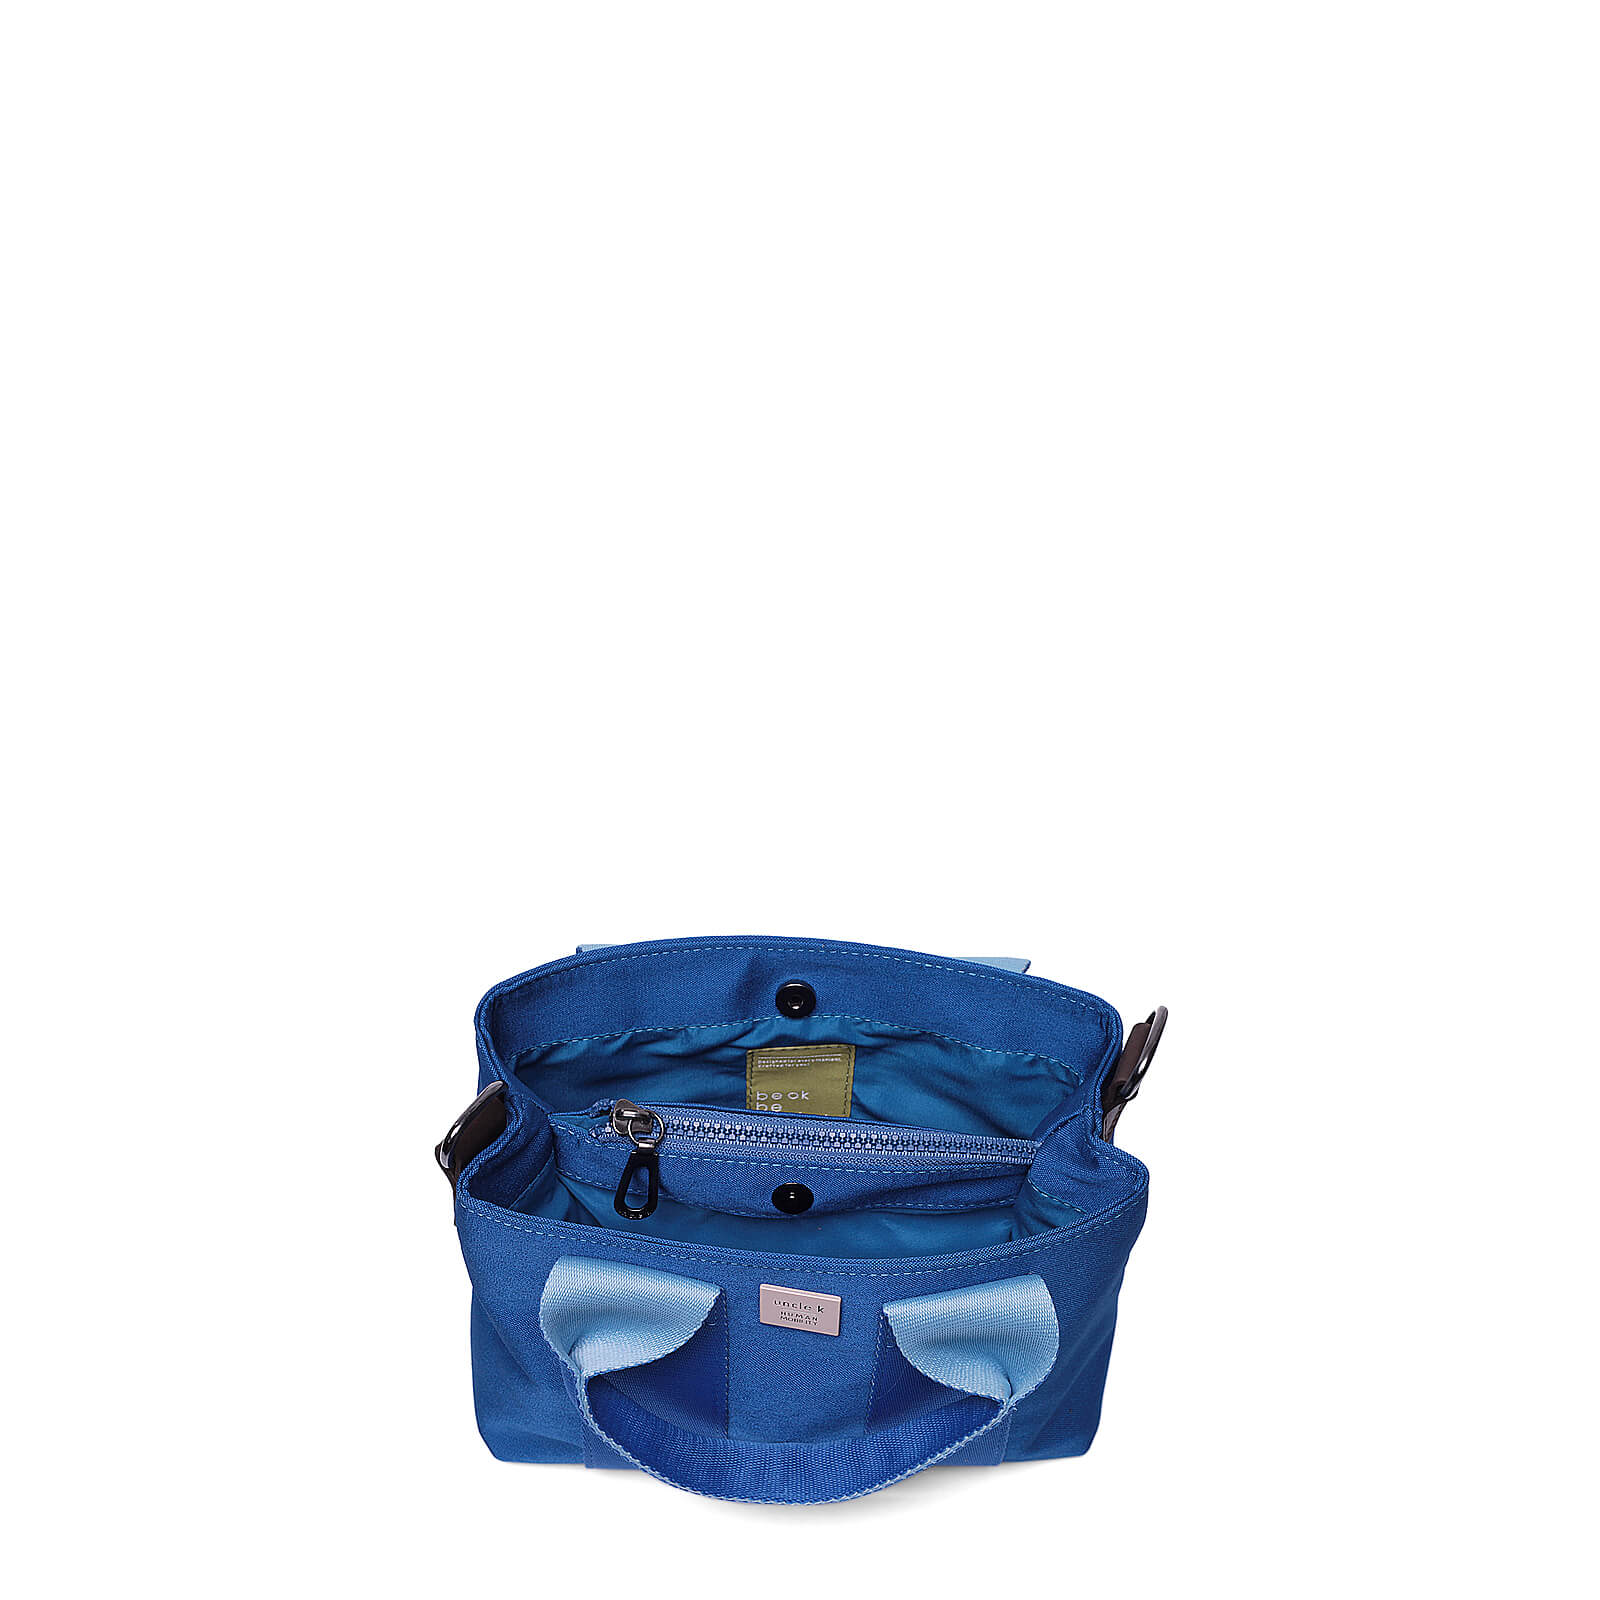 bolsa-nylon-61087-v24-unclek-azul-escuro-3